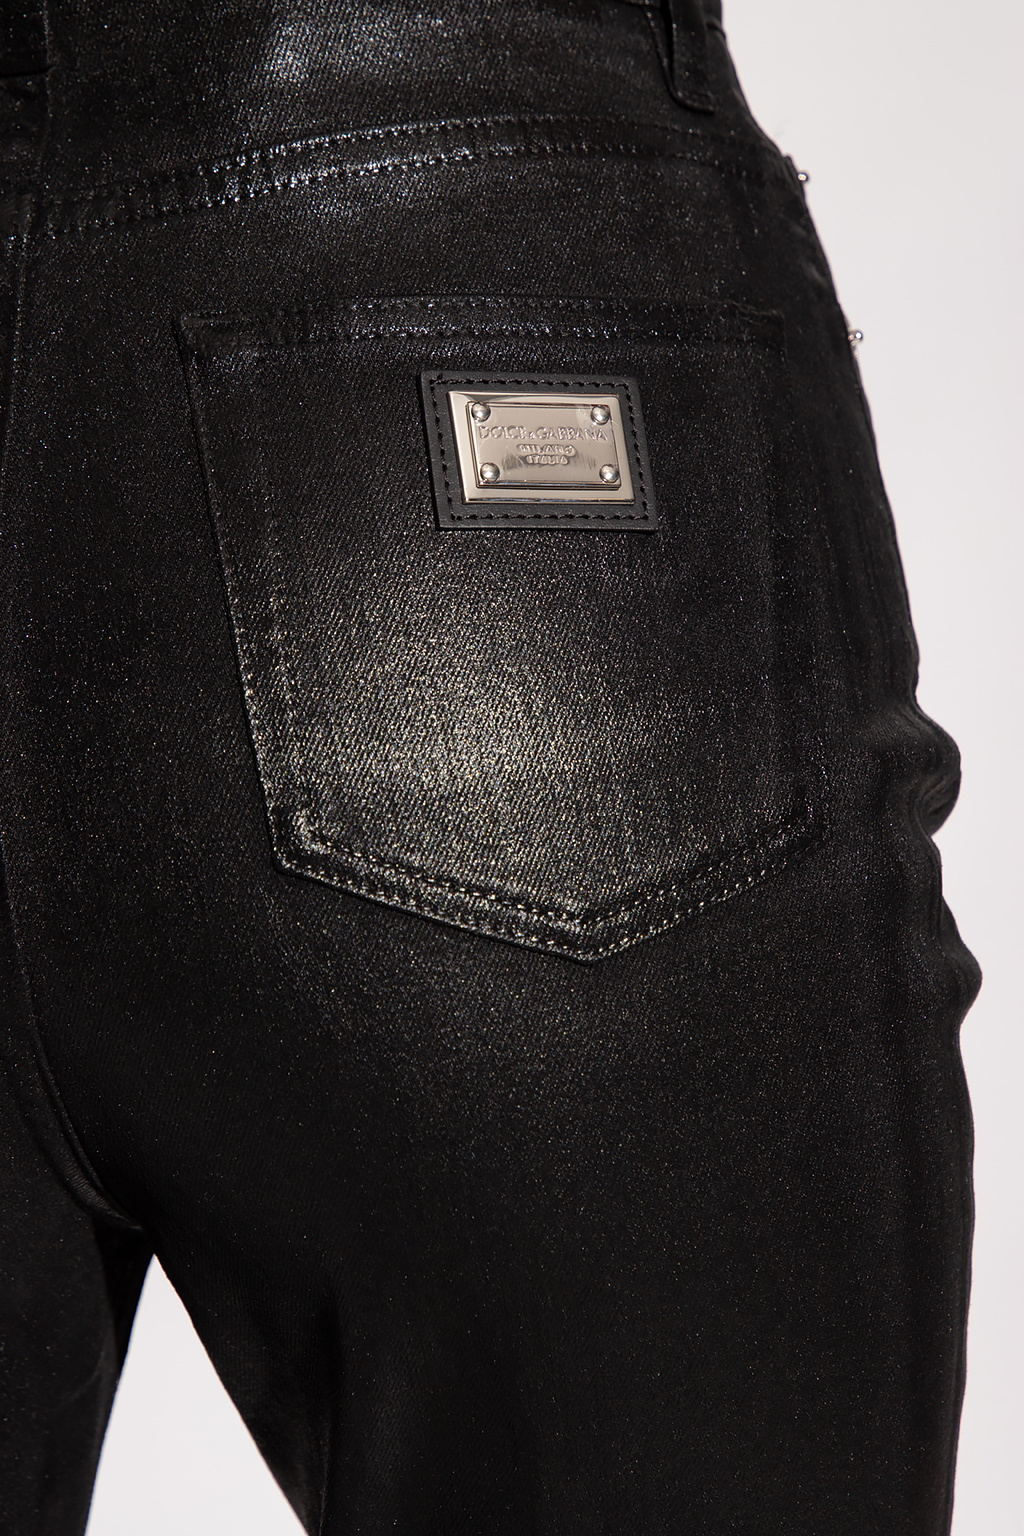 dolce gabbana low top sneakers item ‘Grace’ waxed jeans